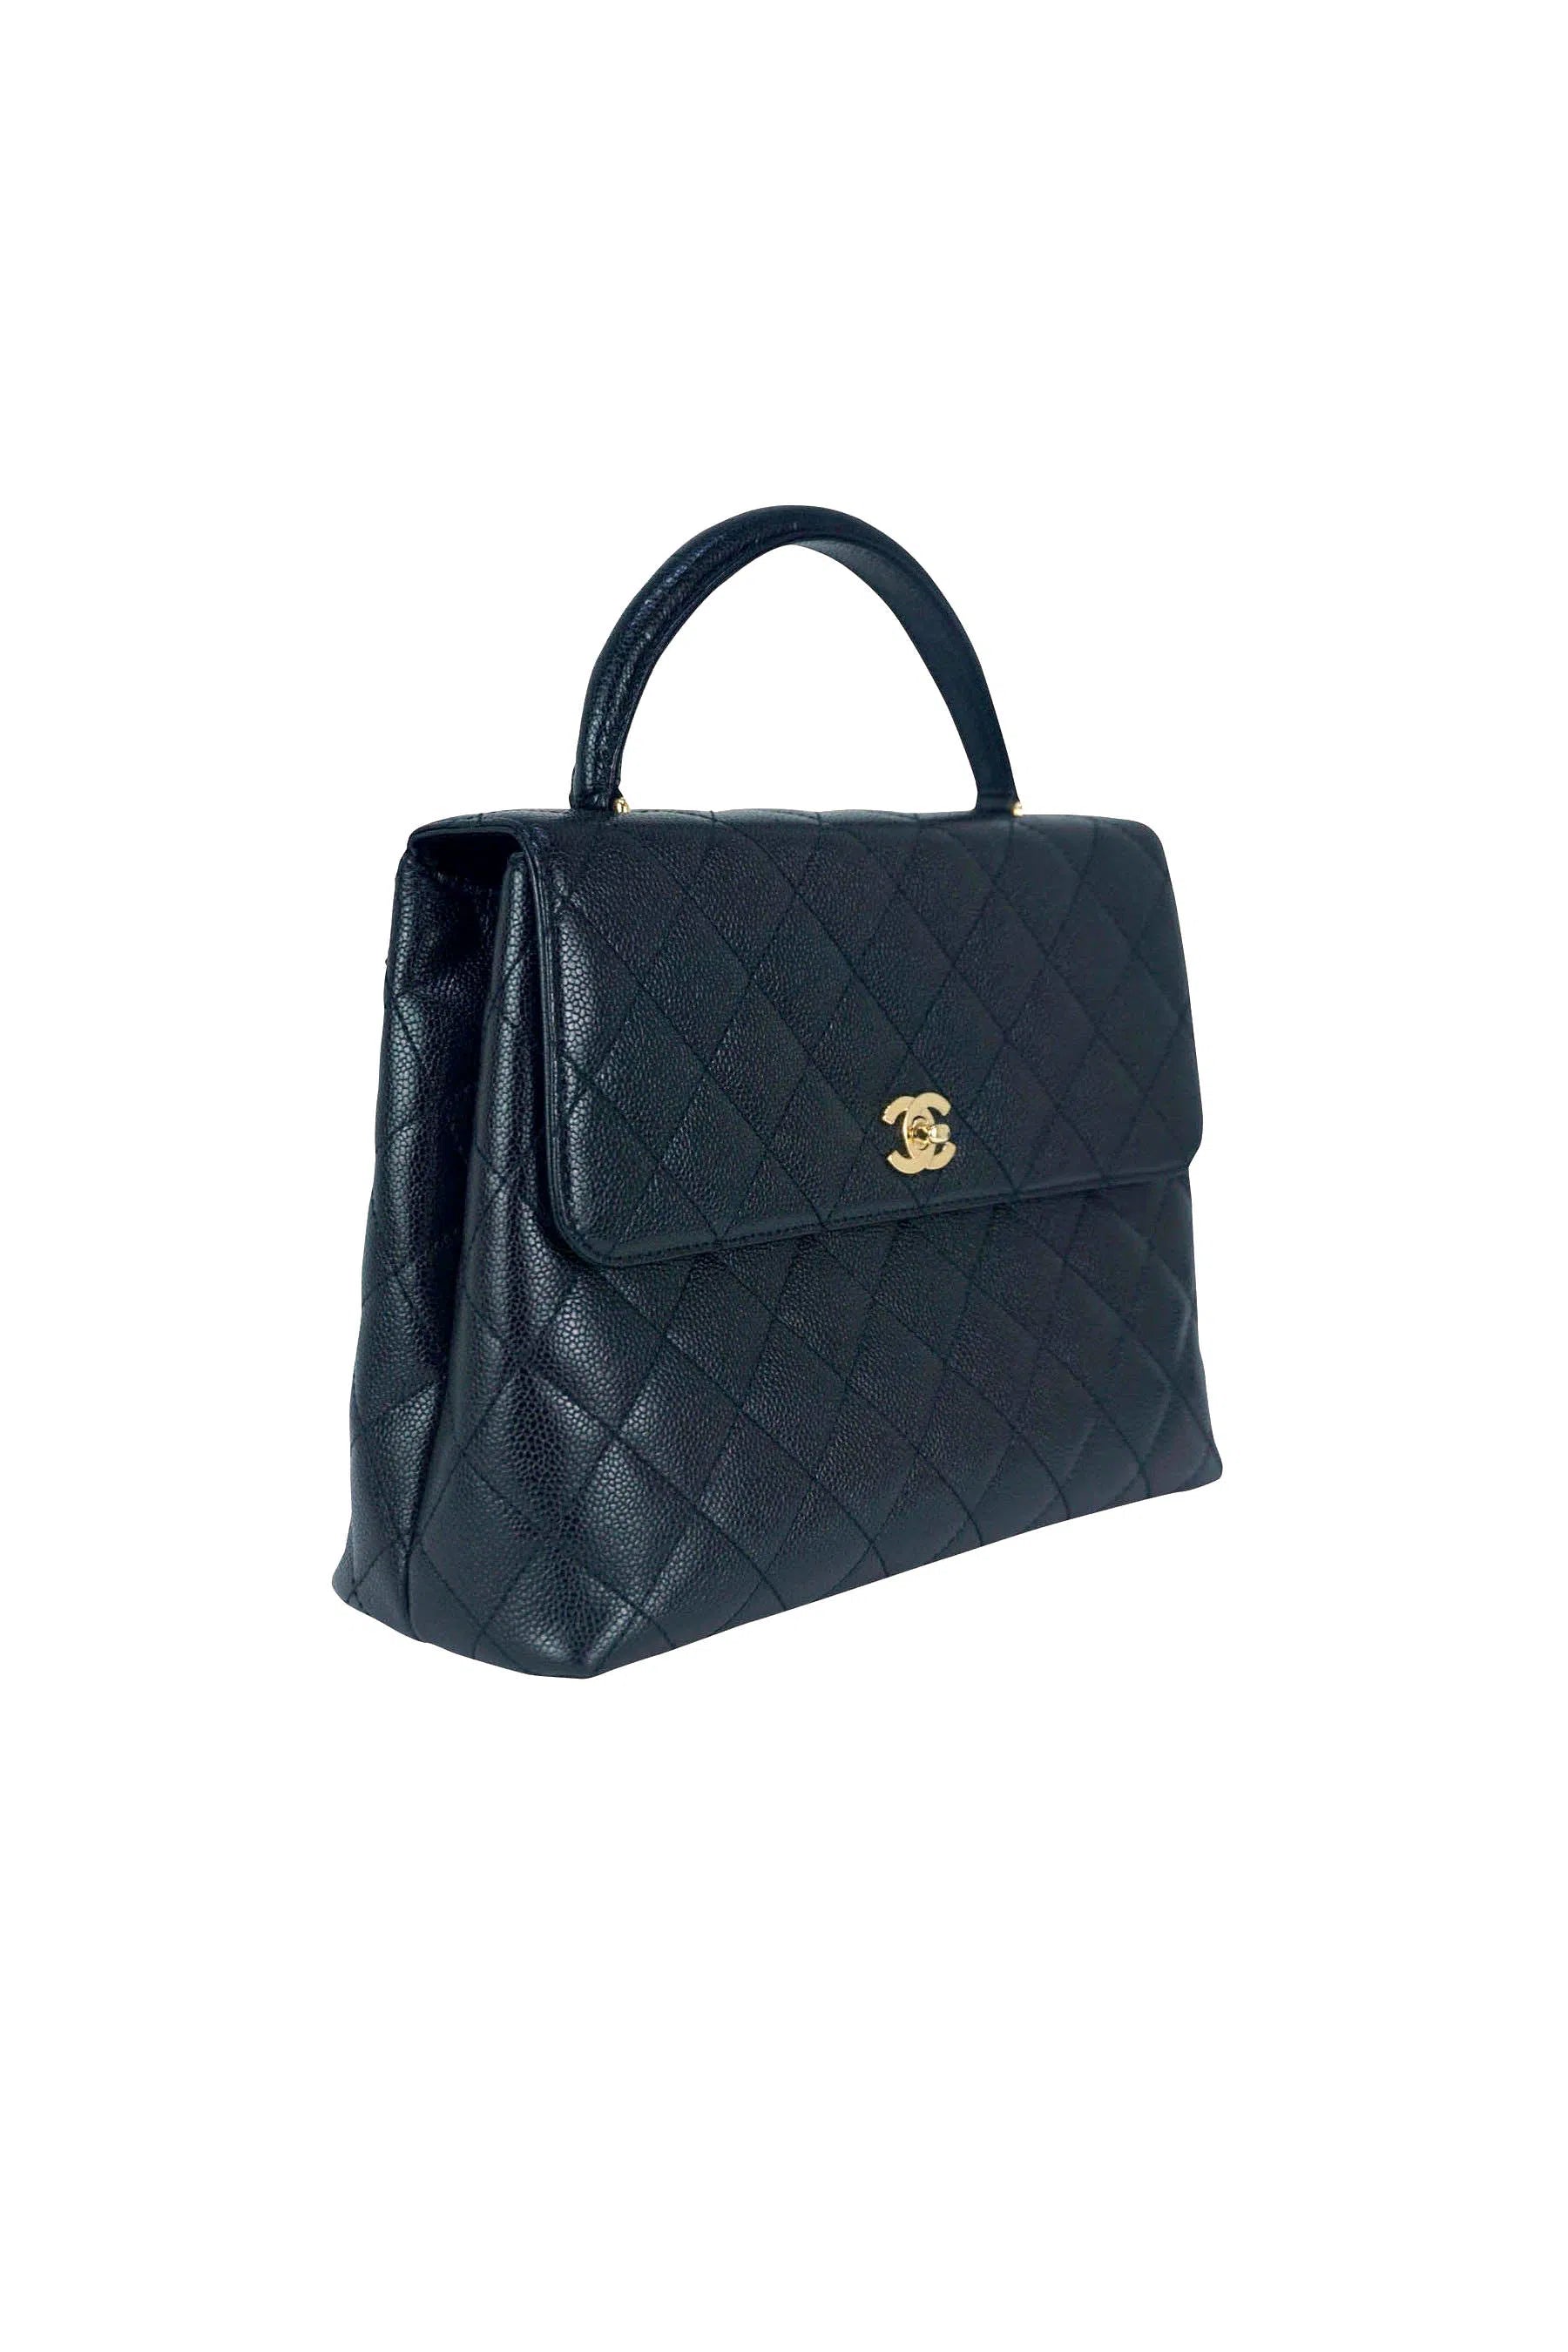 Chanel Vintage Black Caviar Kelly Bag